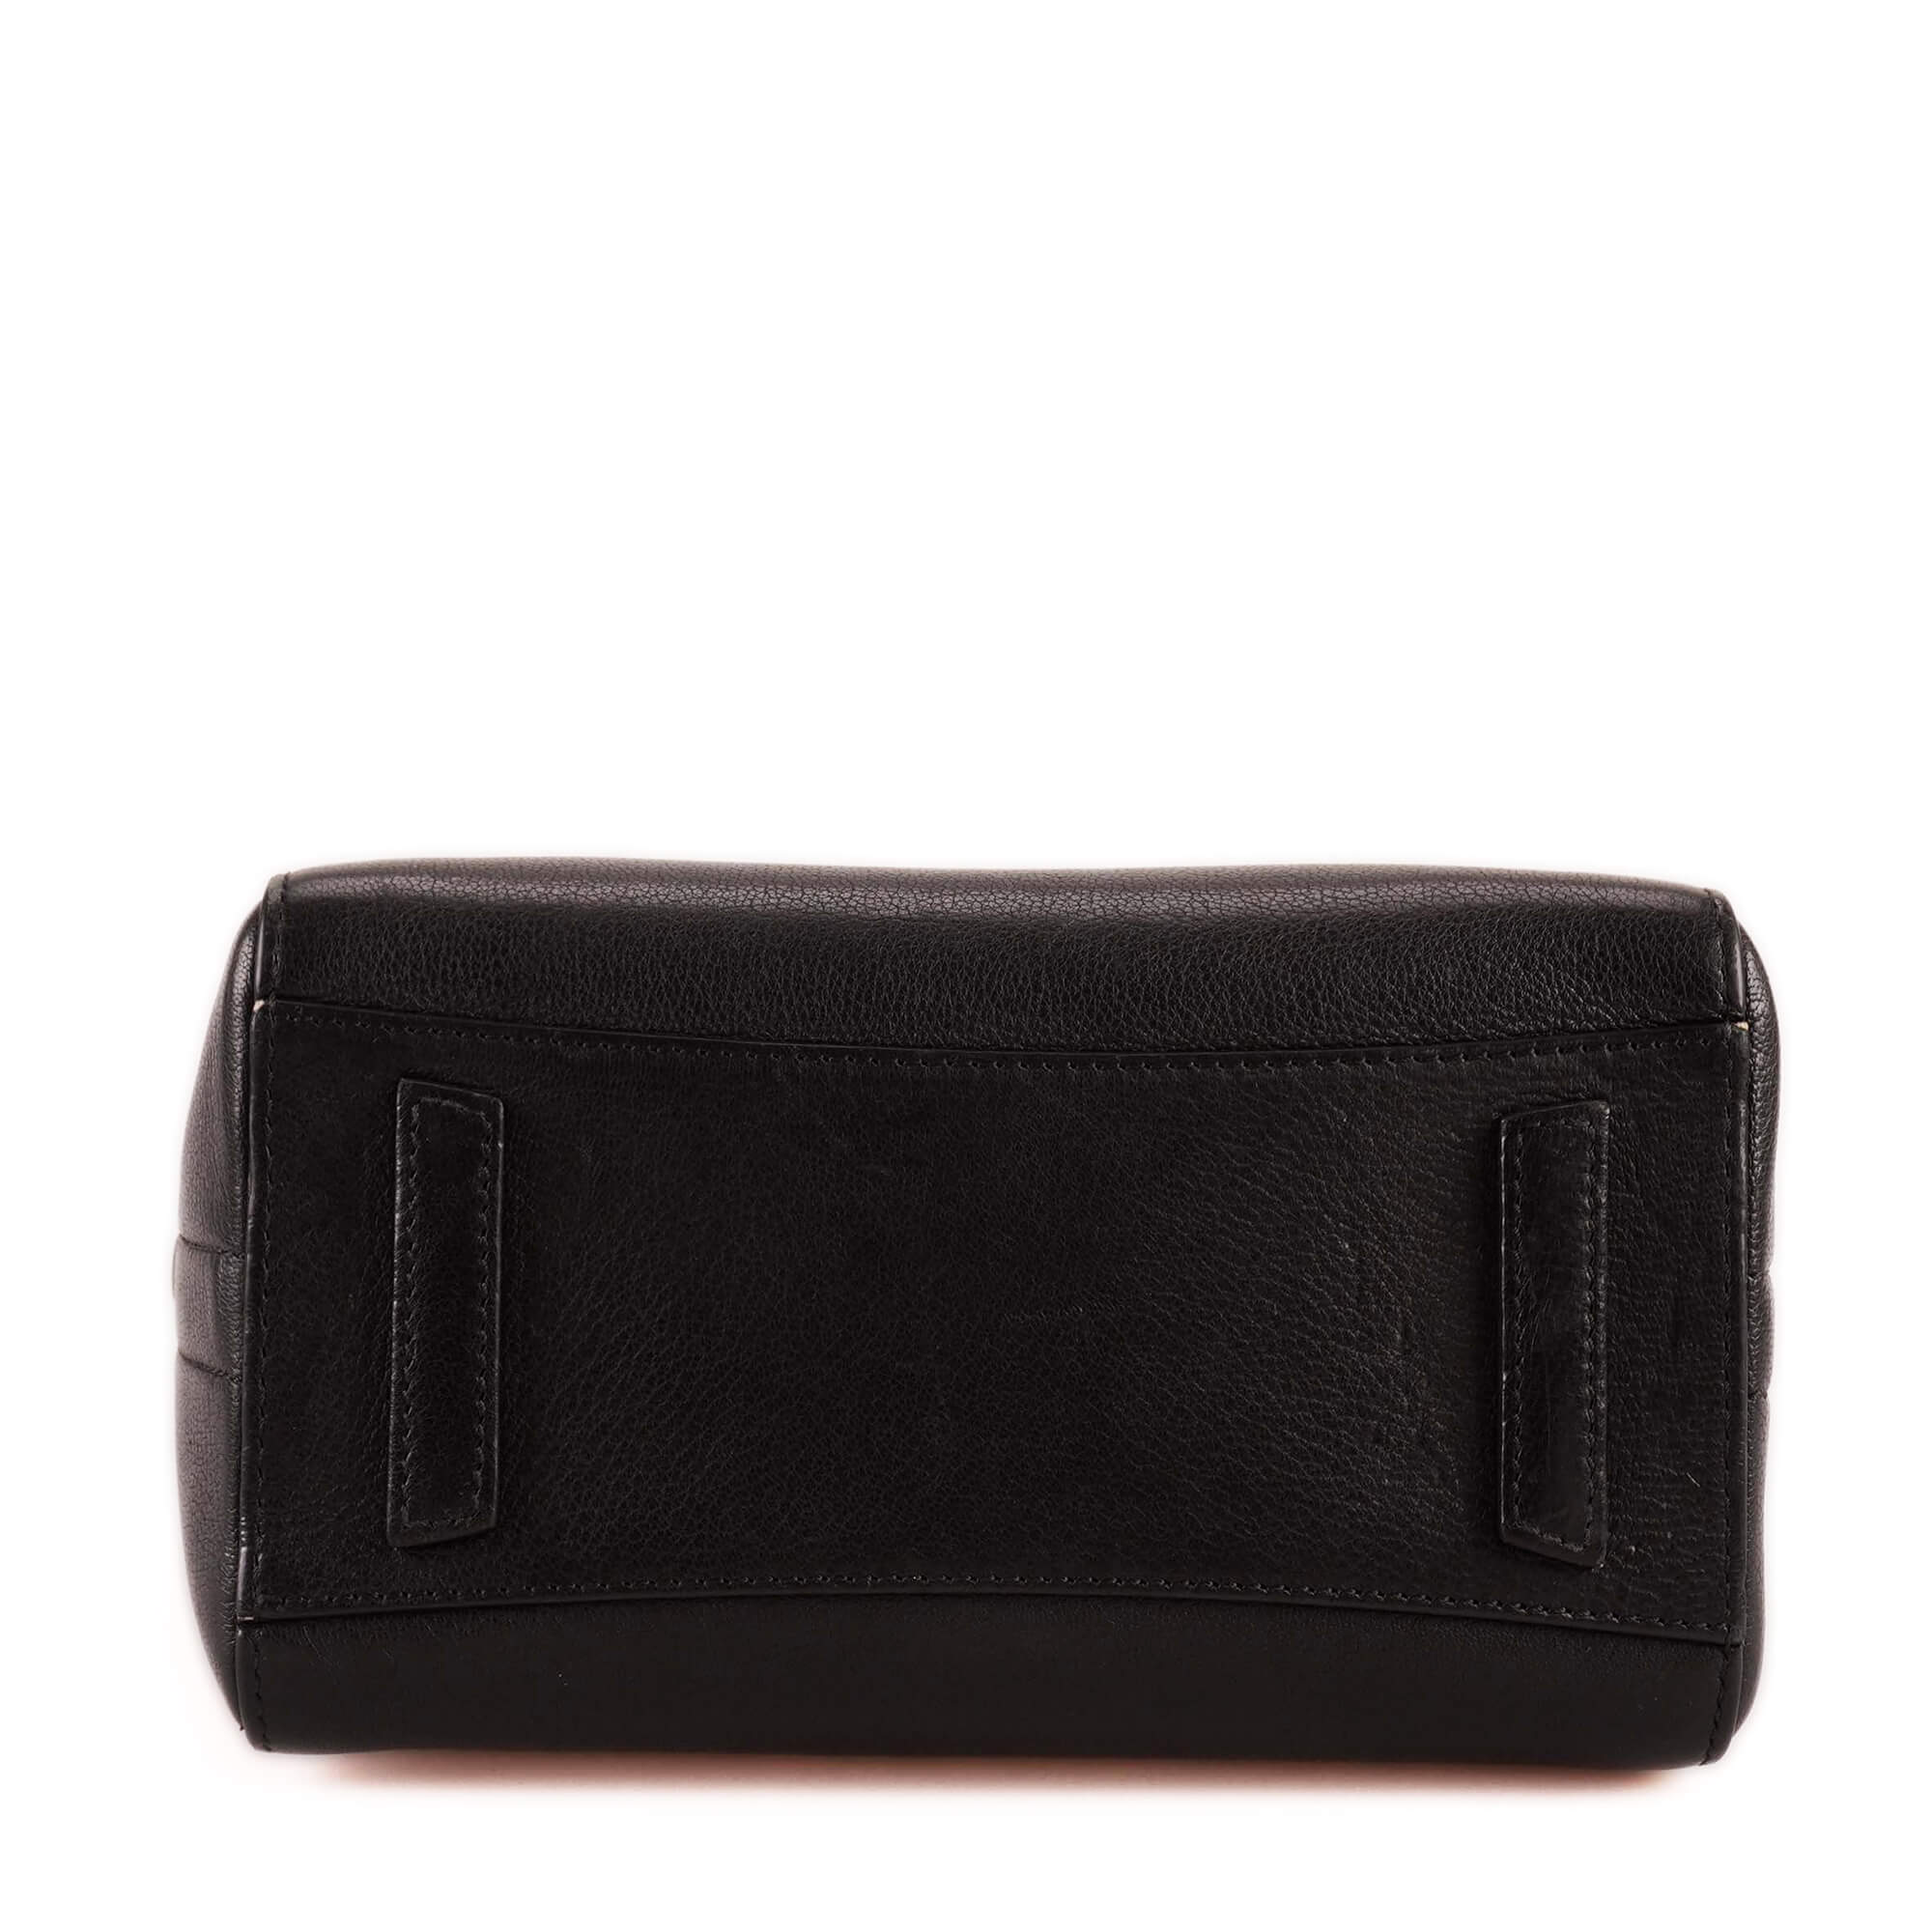 Givenchy - Black Leather Antigona Nano Bag 